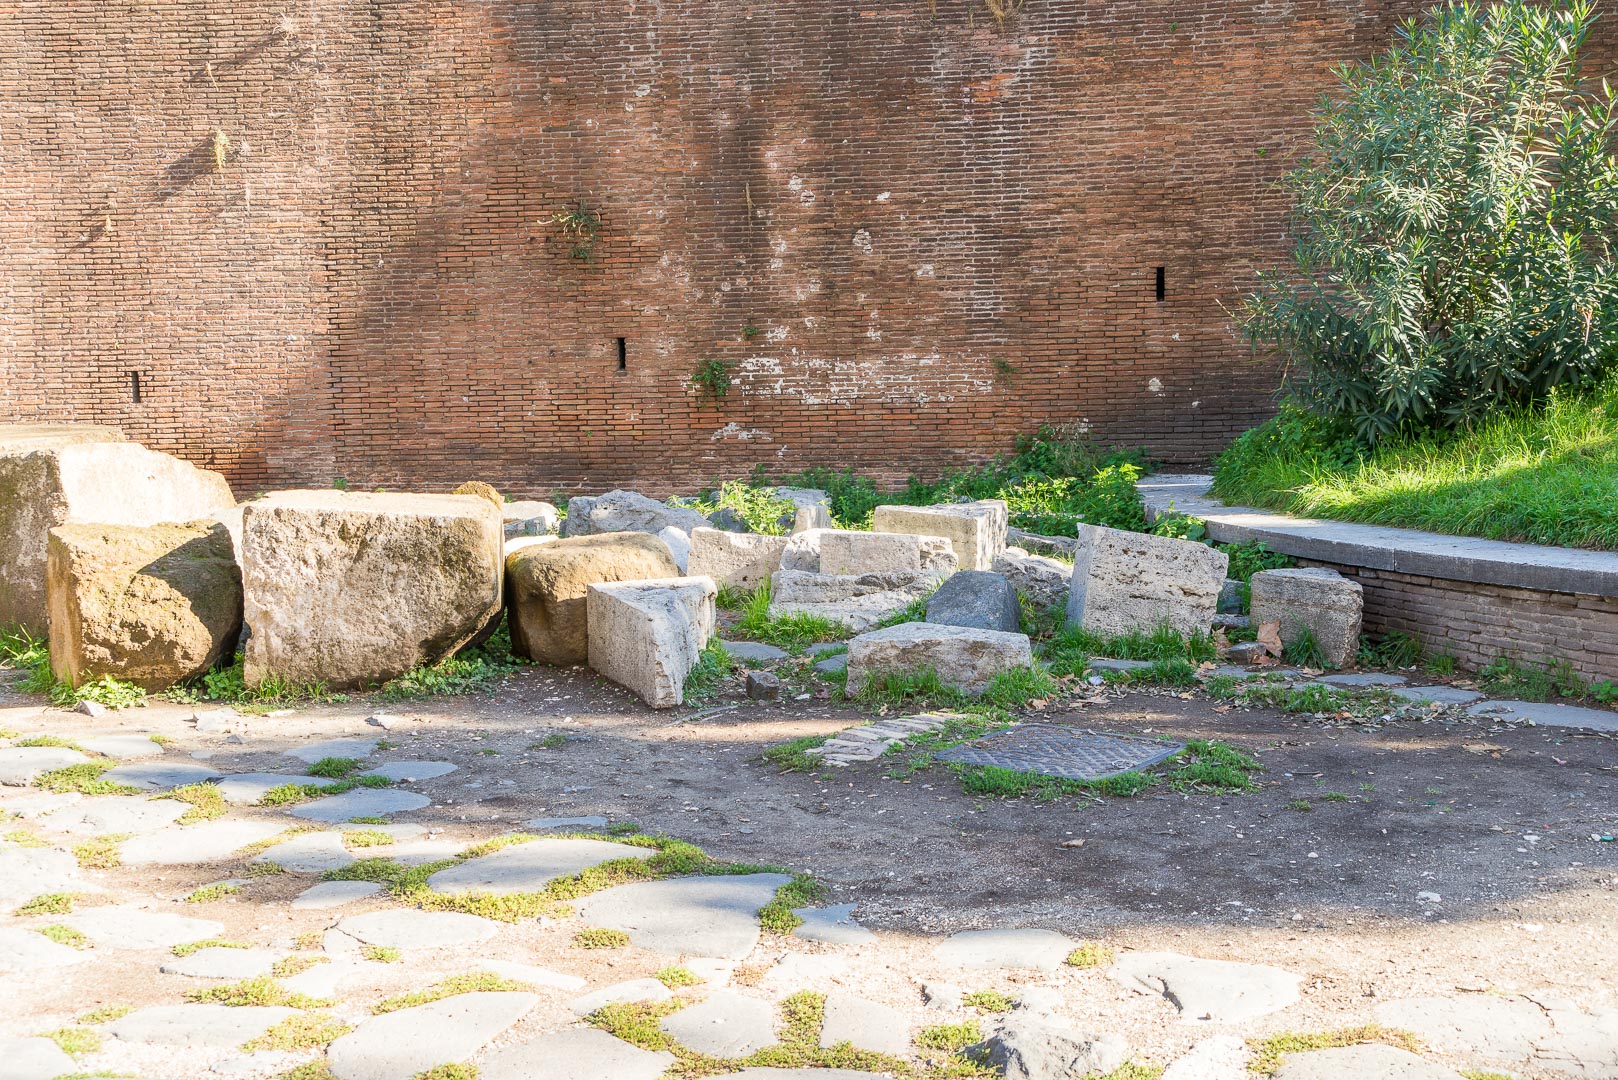 Backplate • ID: 4846 • HDRI Haven - Ruins Of Colosseum